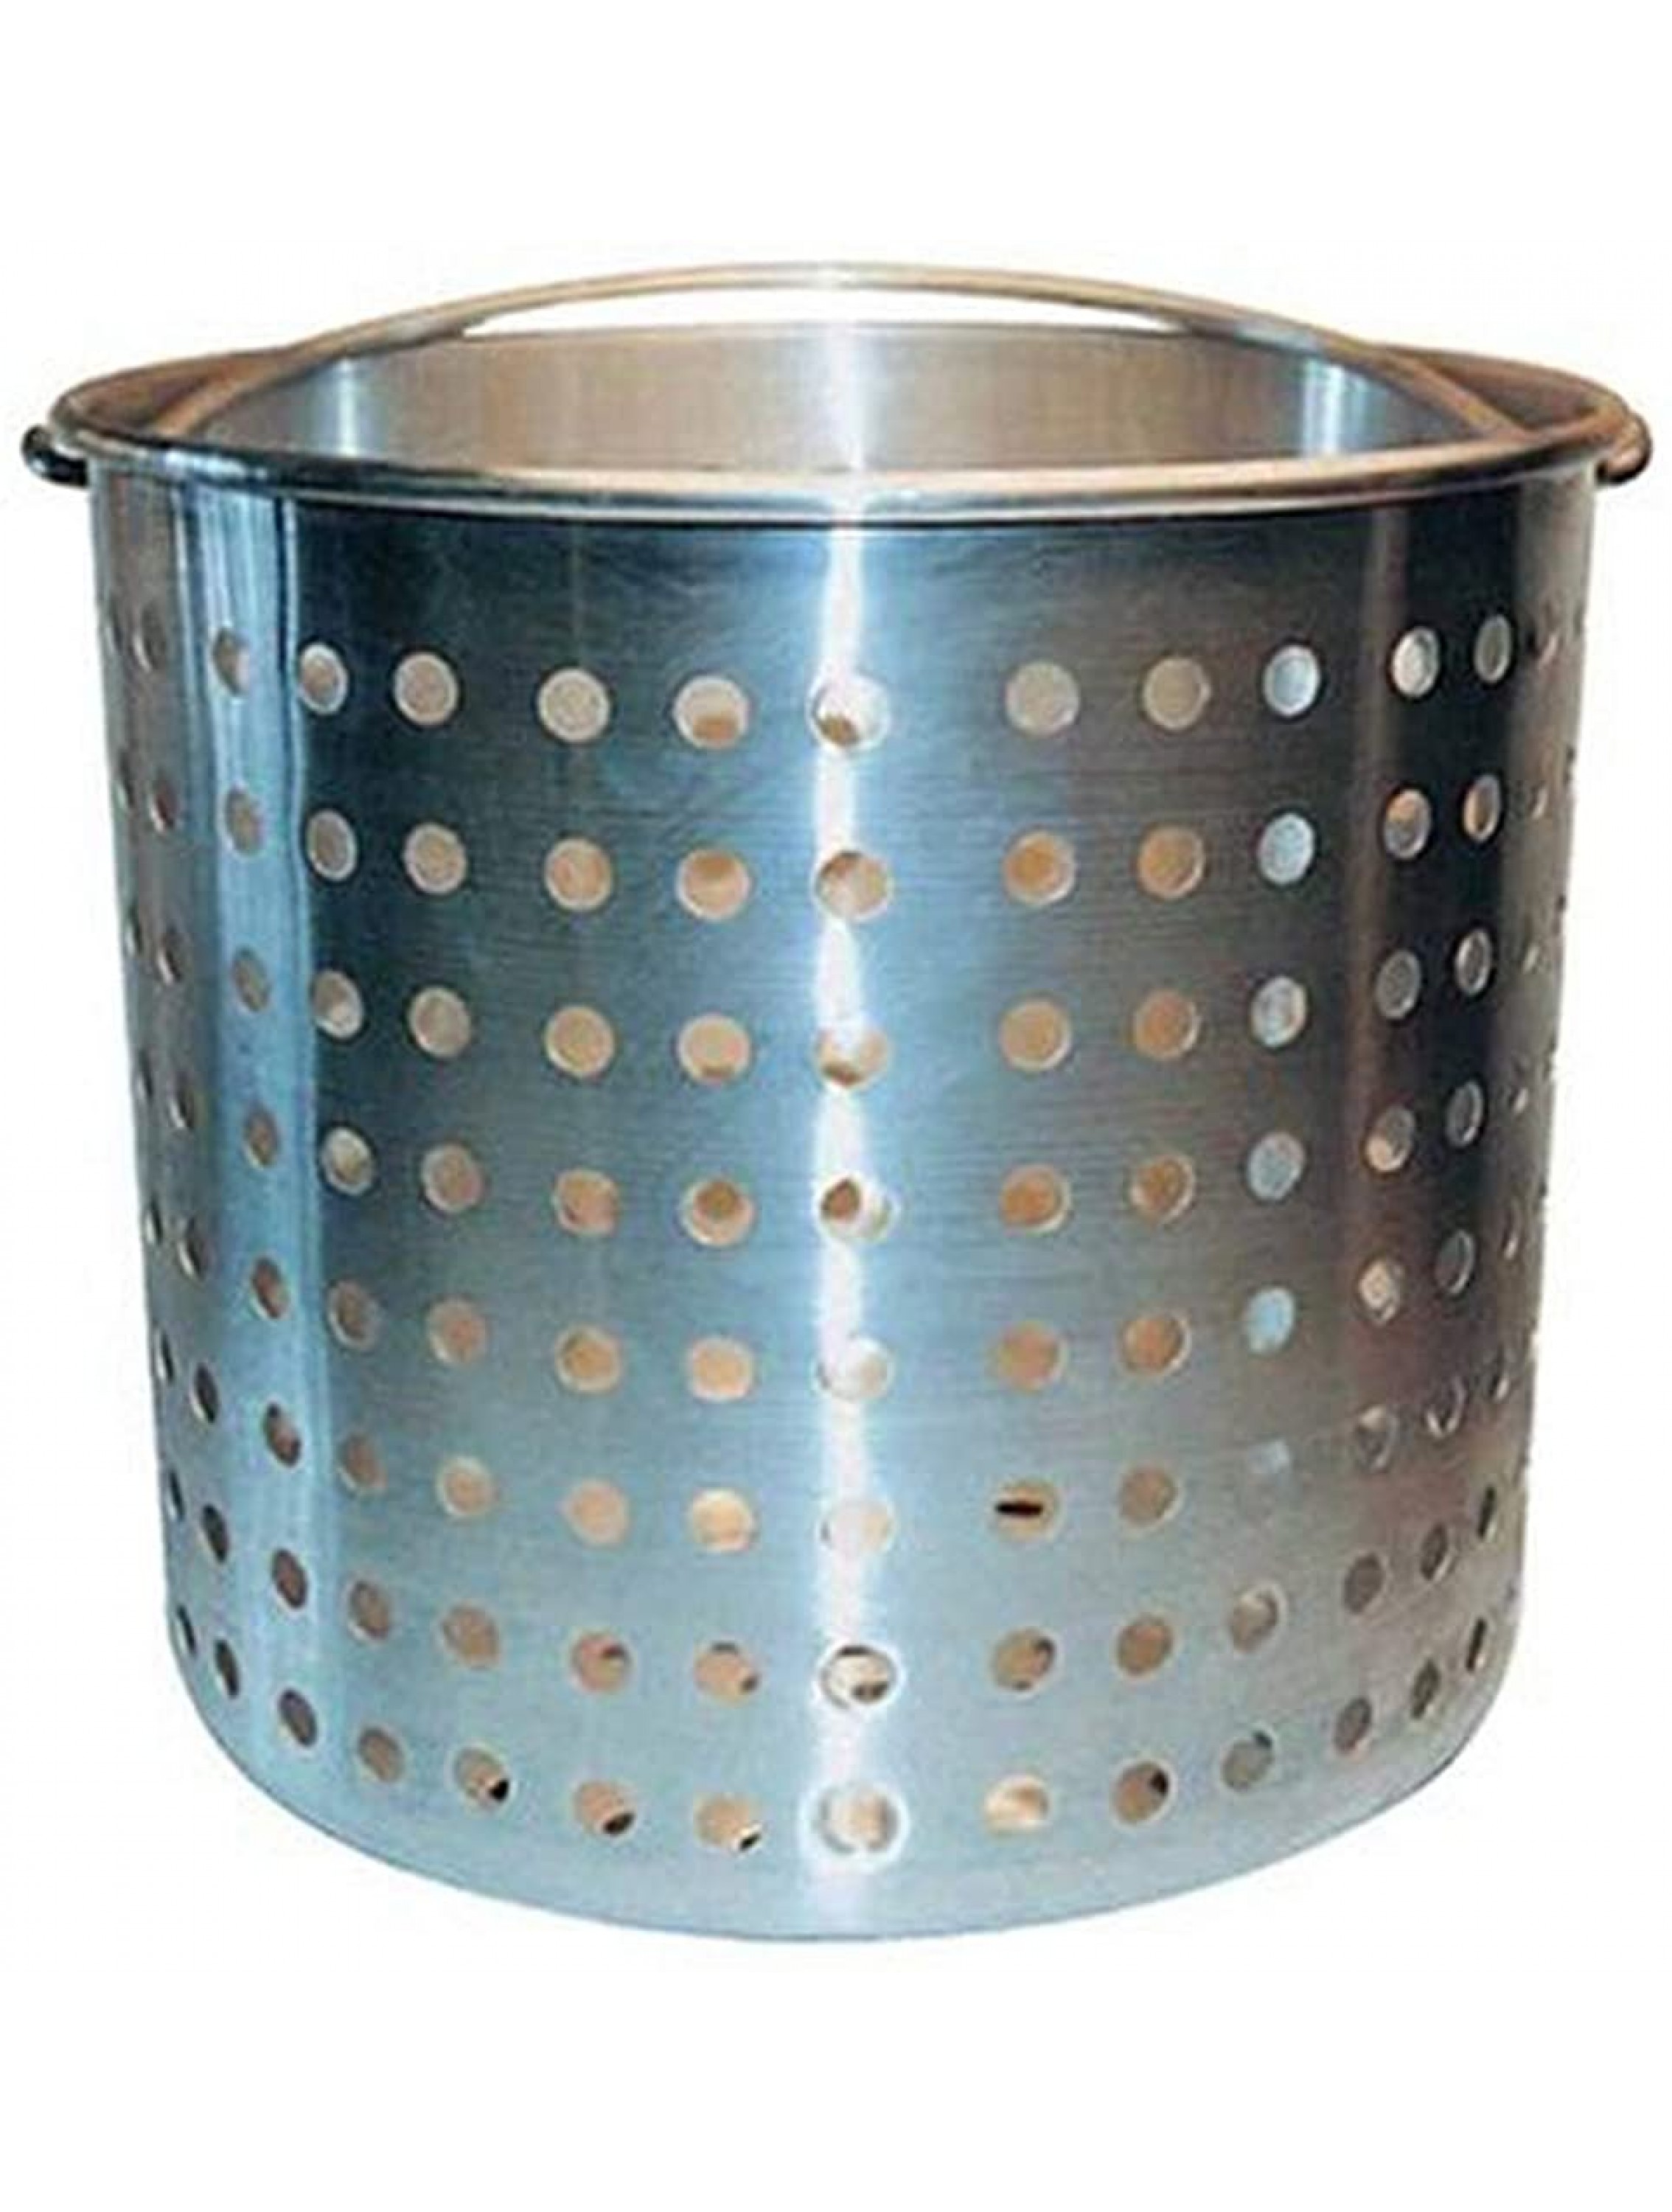 Winware Professional Aluminum Steamer Basket Fits 20-Quart Stock Pot Silver - BCMGYXXF6